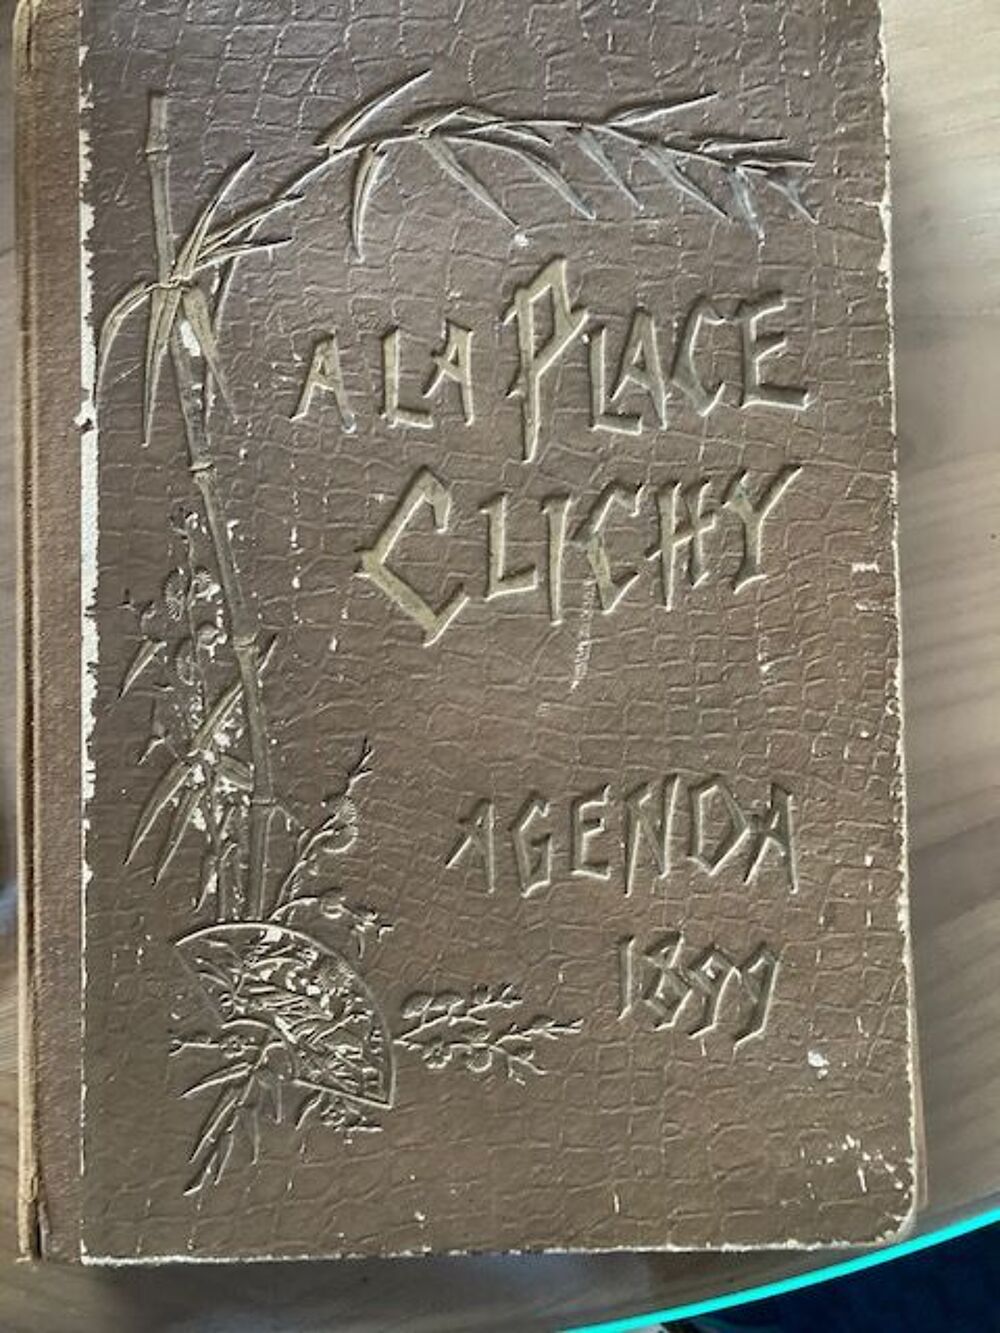 AGENDA 1899-Ala place Clichy 